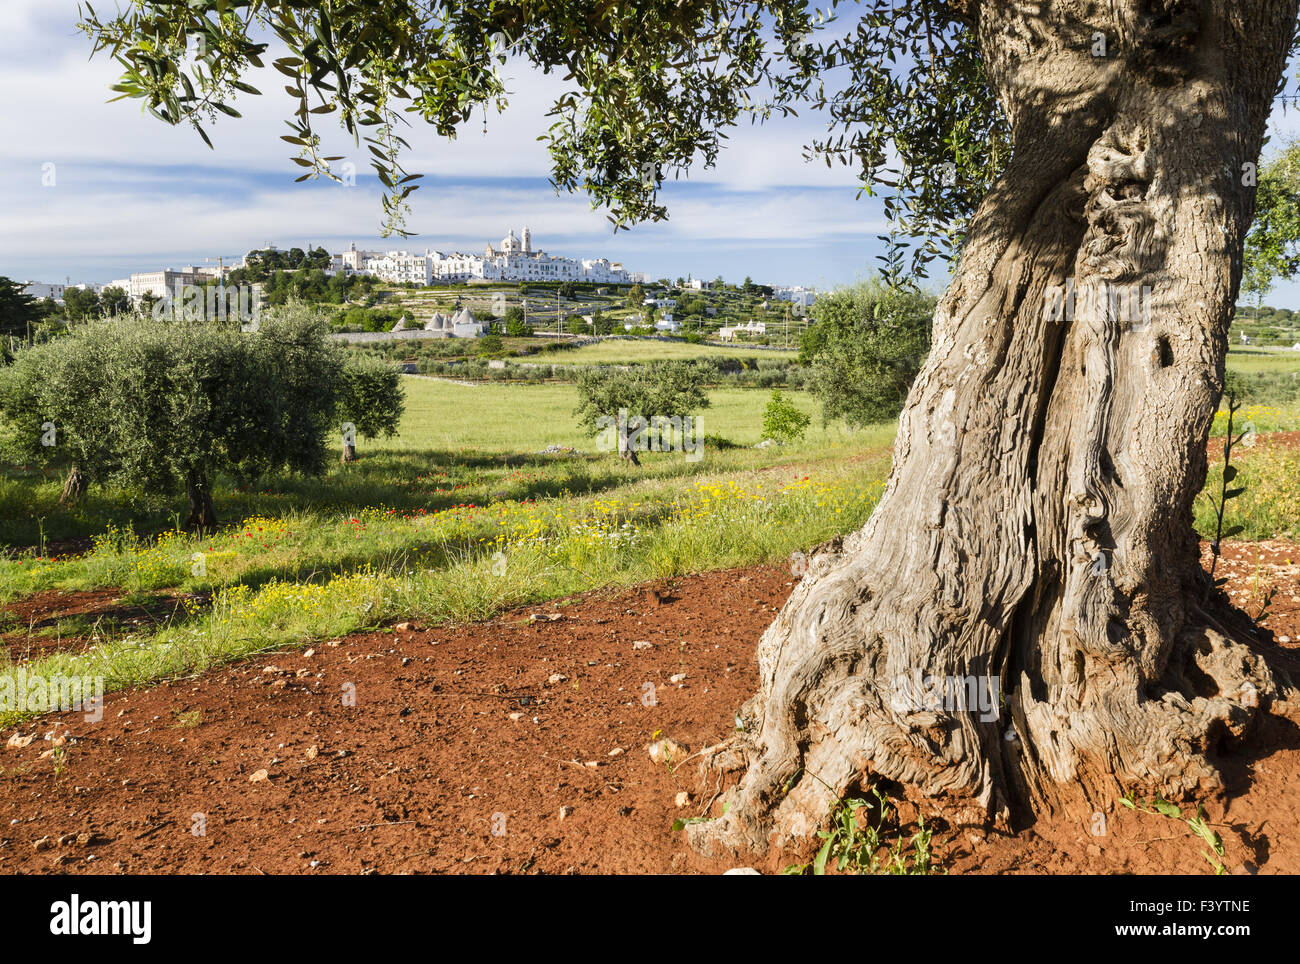 Old olive tree in front Locorotondo, Apulia Stock Photo